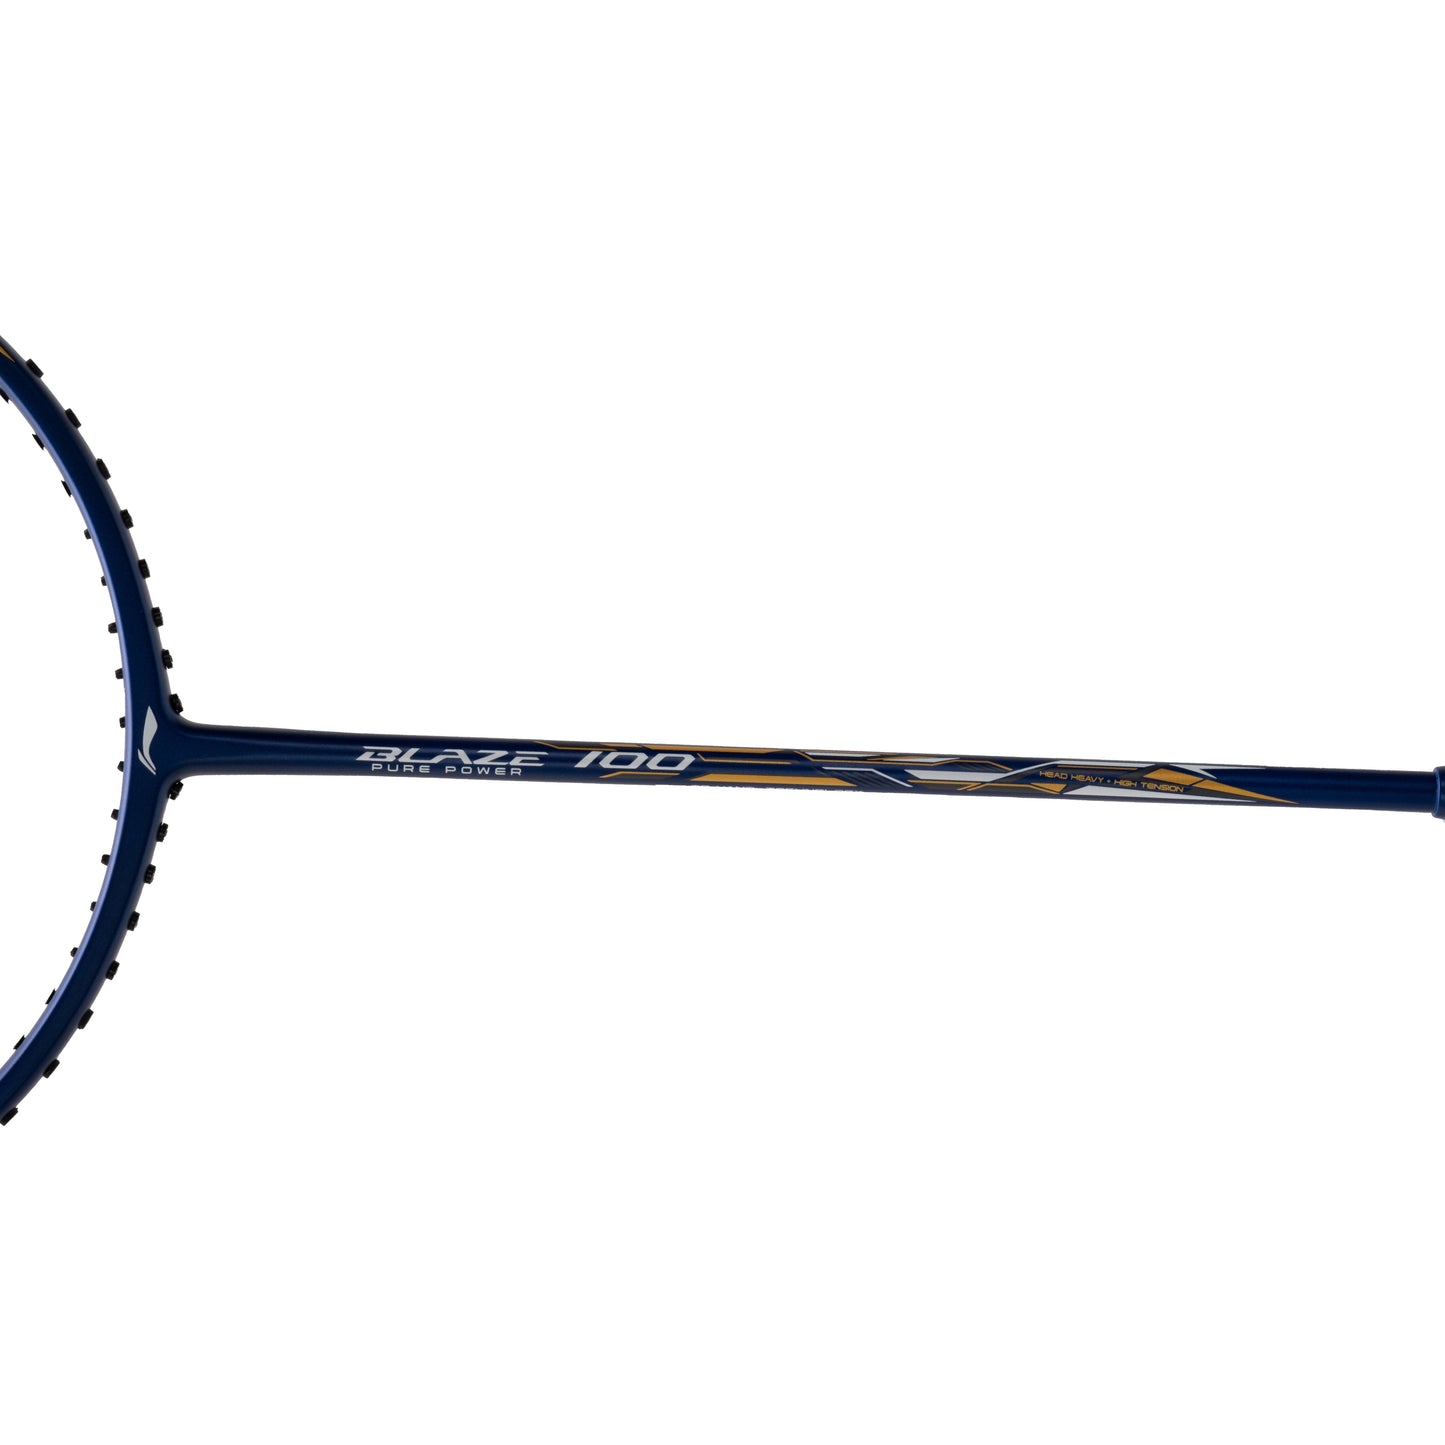 Li-Ning Blaze 100 Badminton Racket ( Navy / White / Gold )